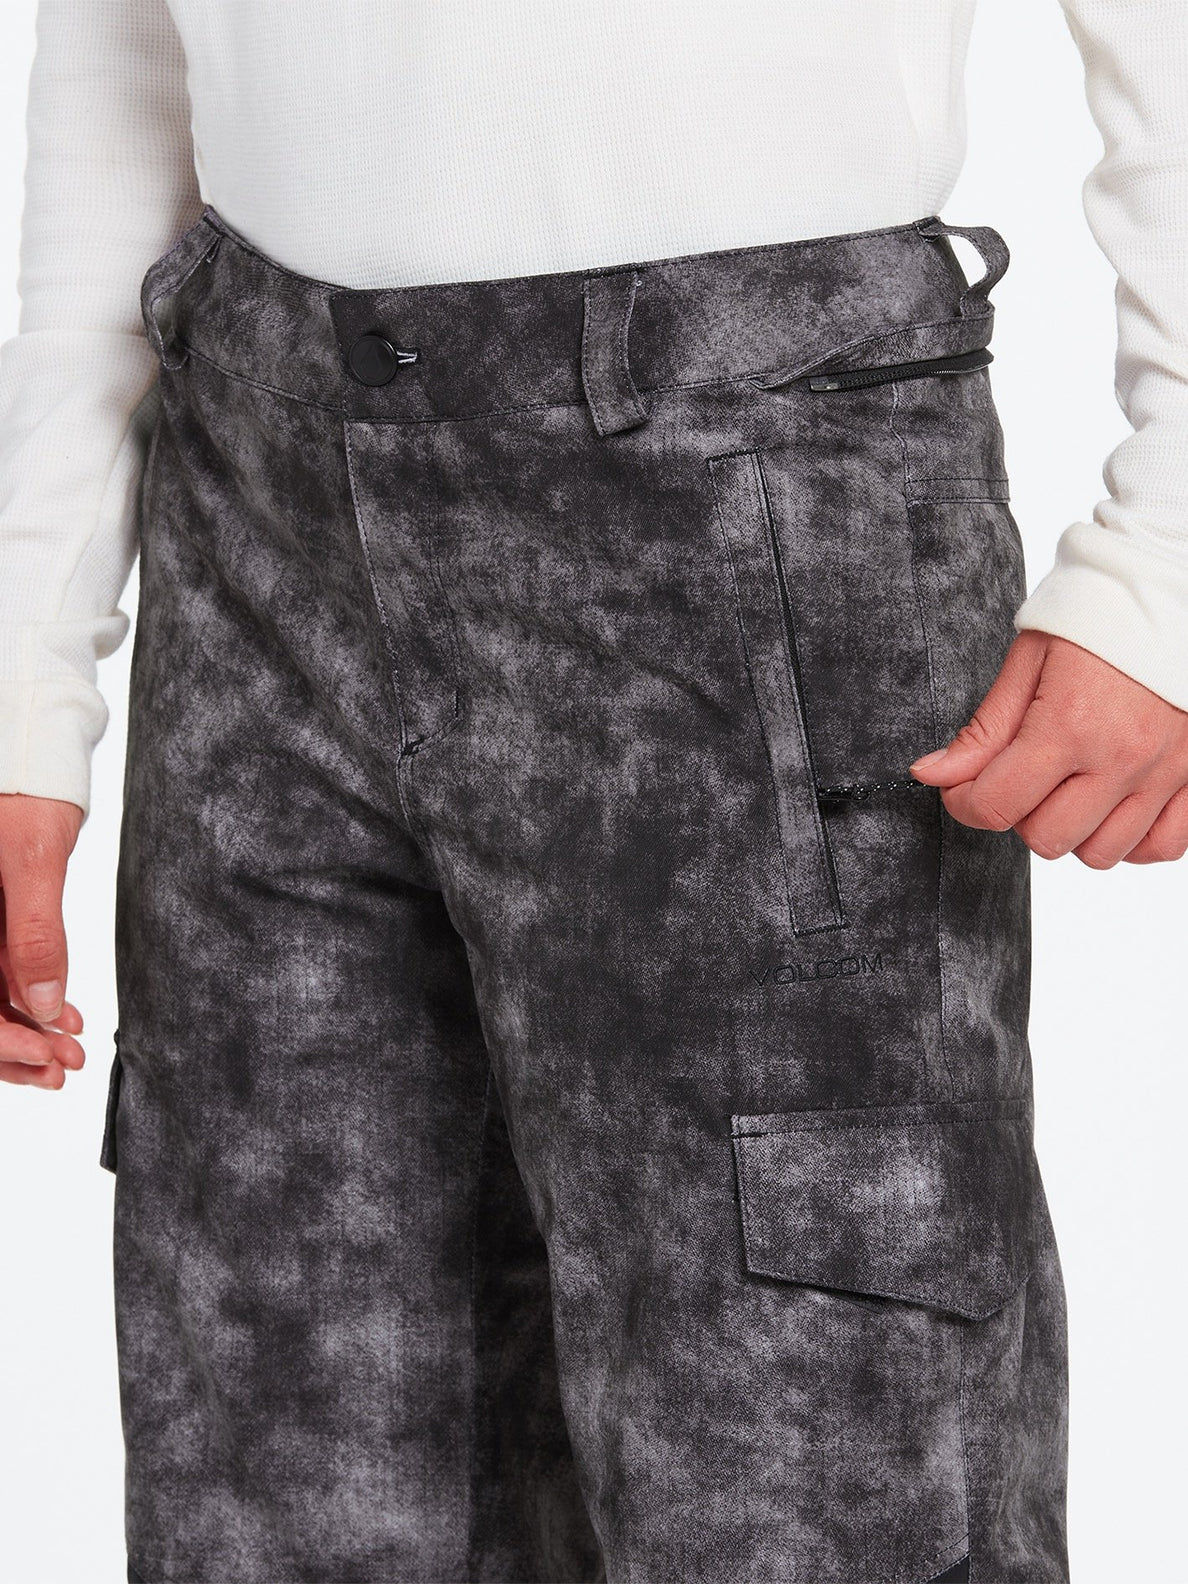 Hotlapper Trousers - ACID BLACK (H1352208_ABK) [13]